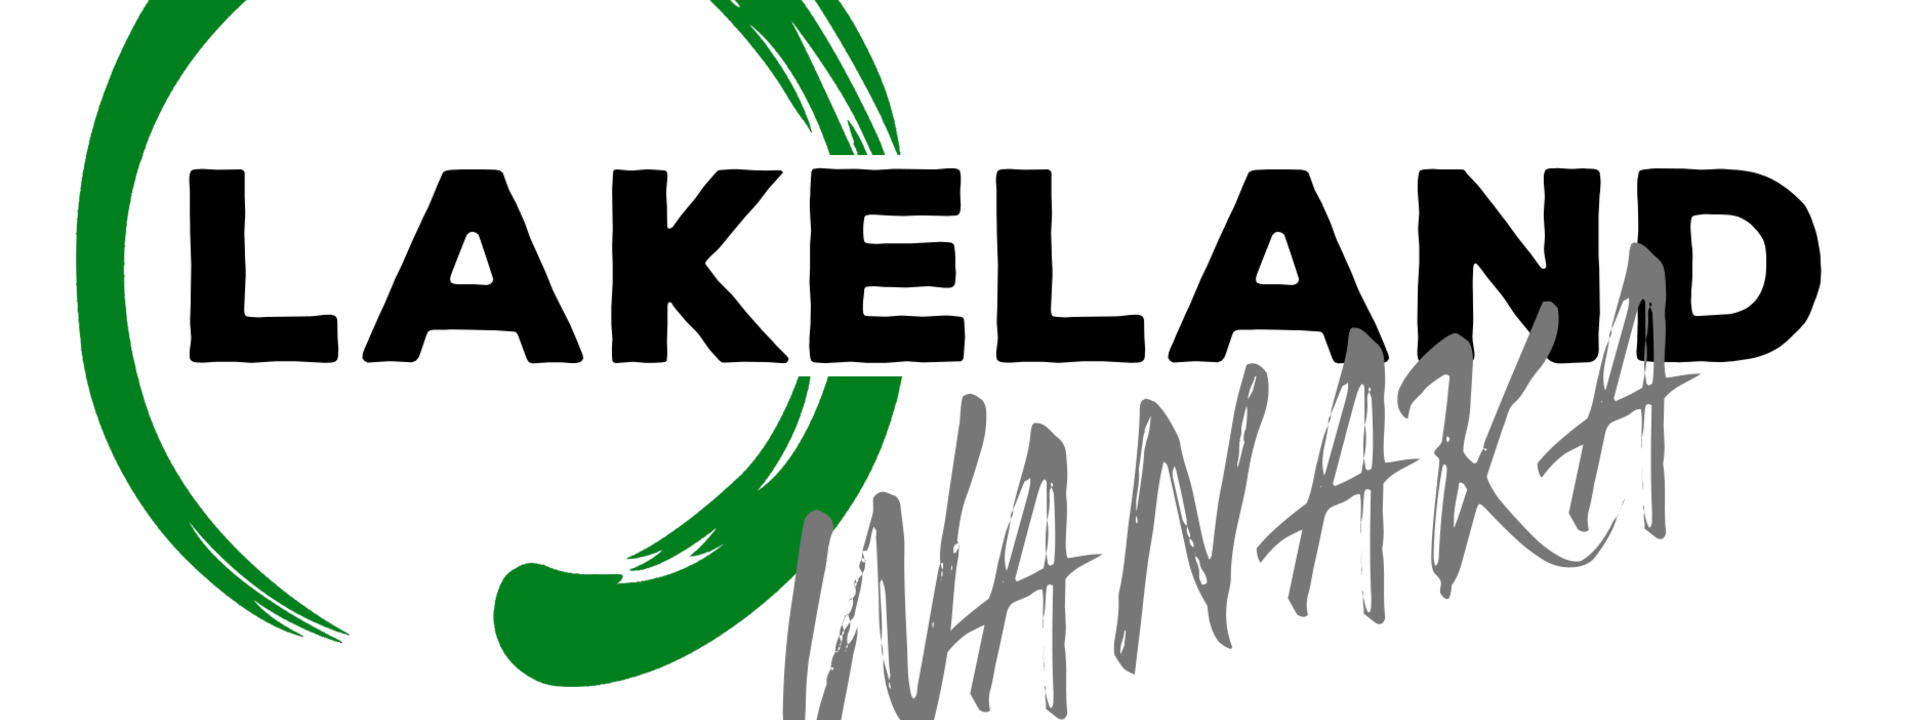 lakeland-wanaka-logo.jpg